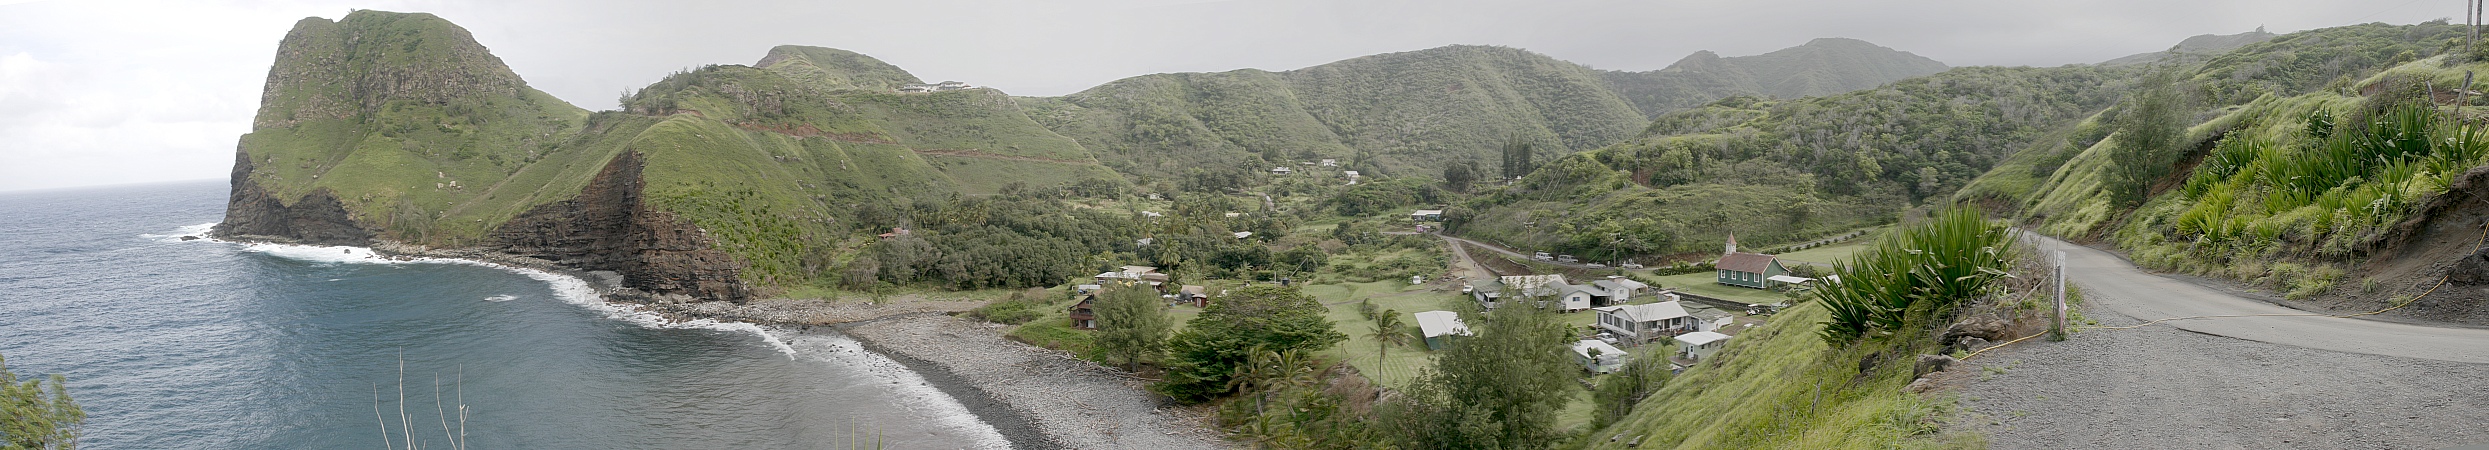 Kahakuloa Valley